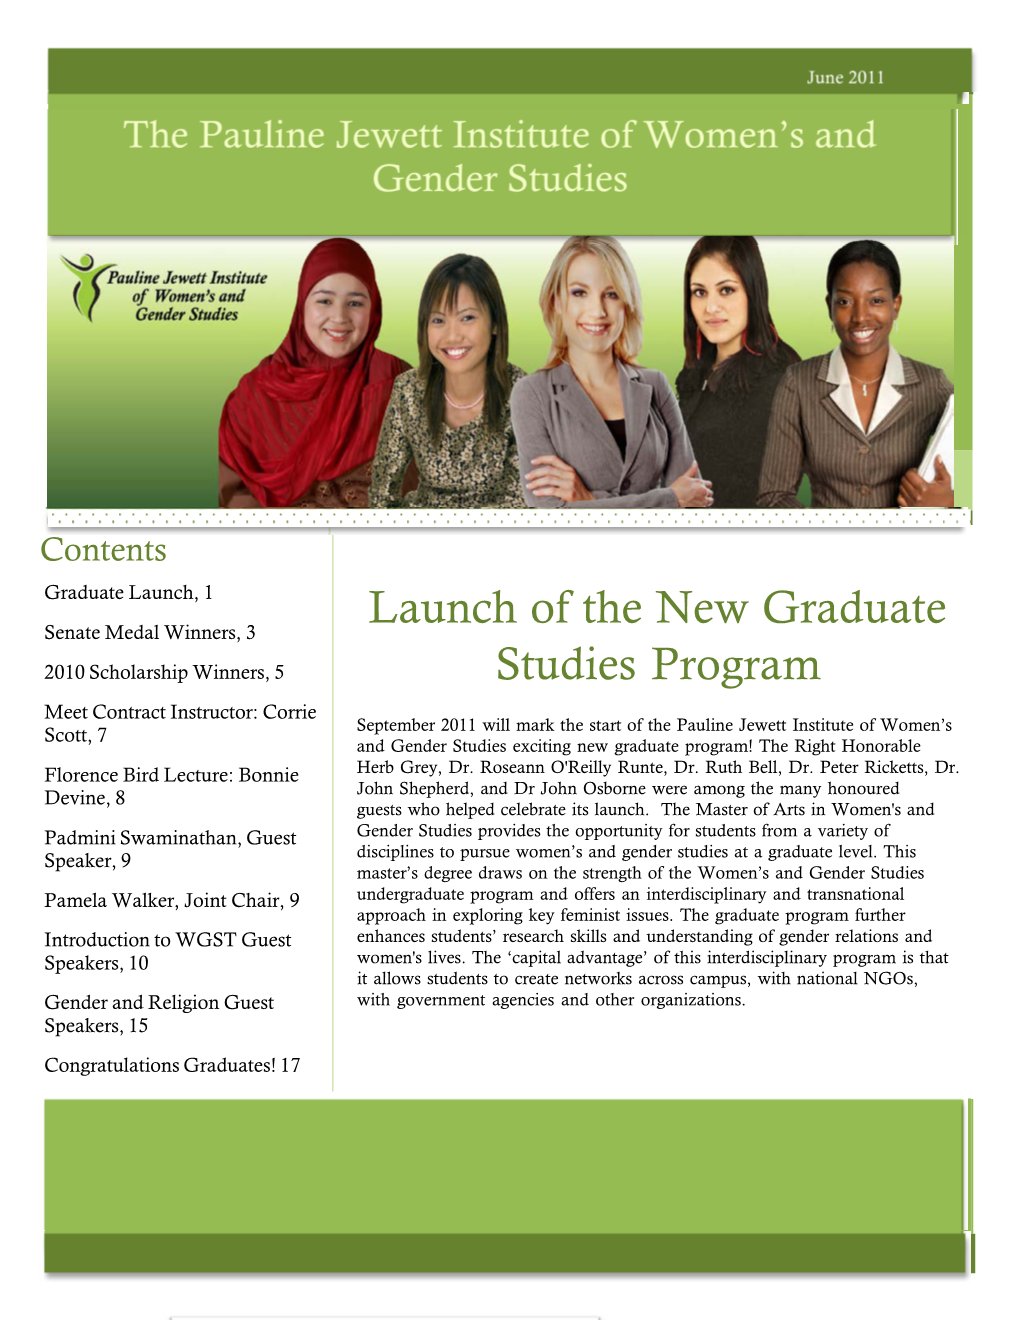 Launch of the New Graduate Studies Program